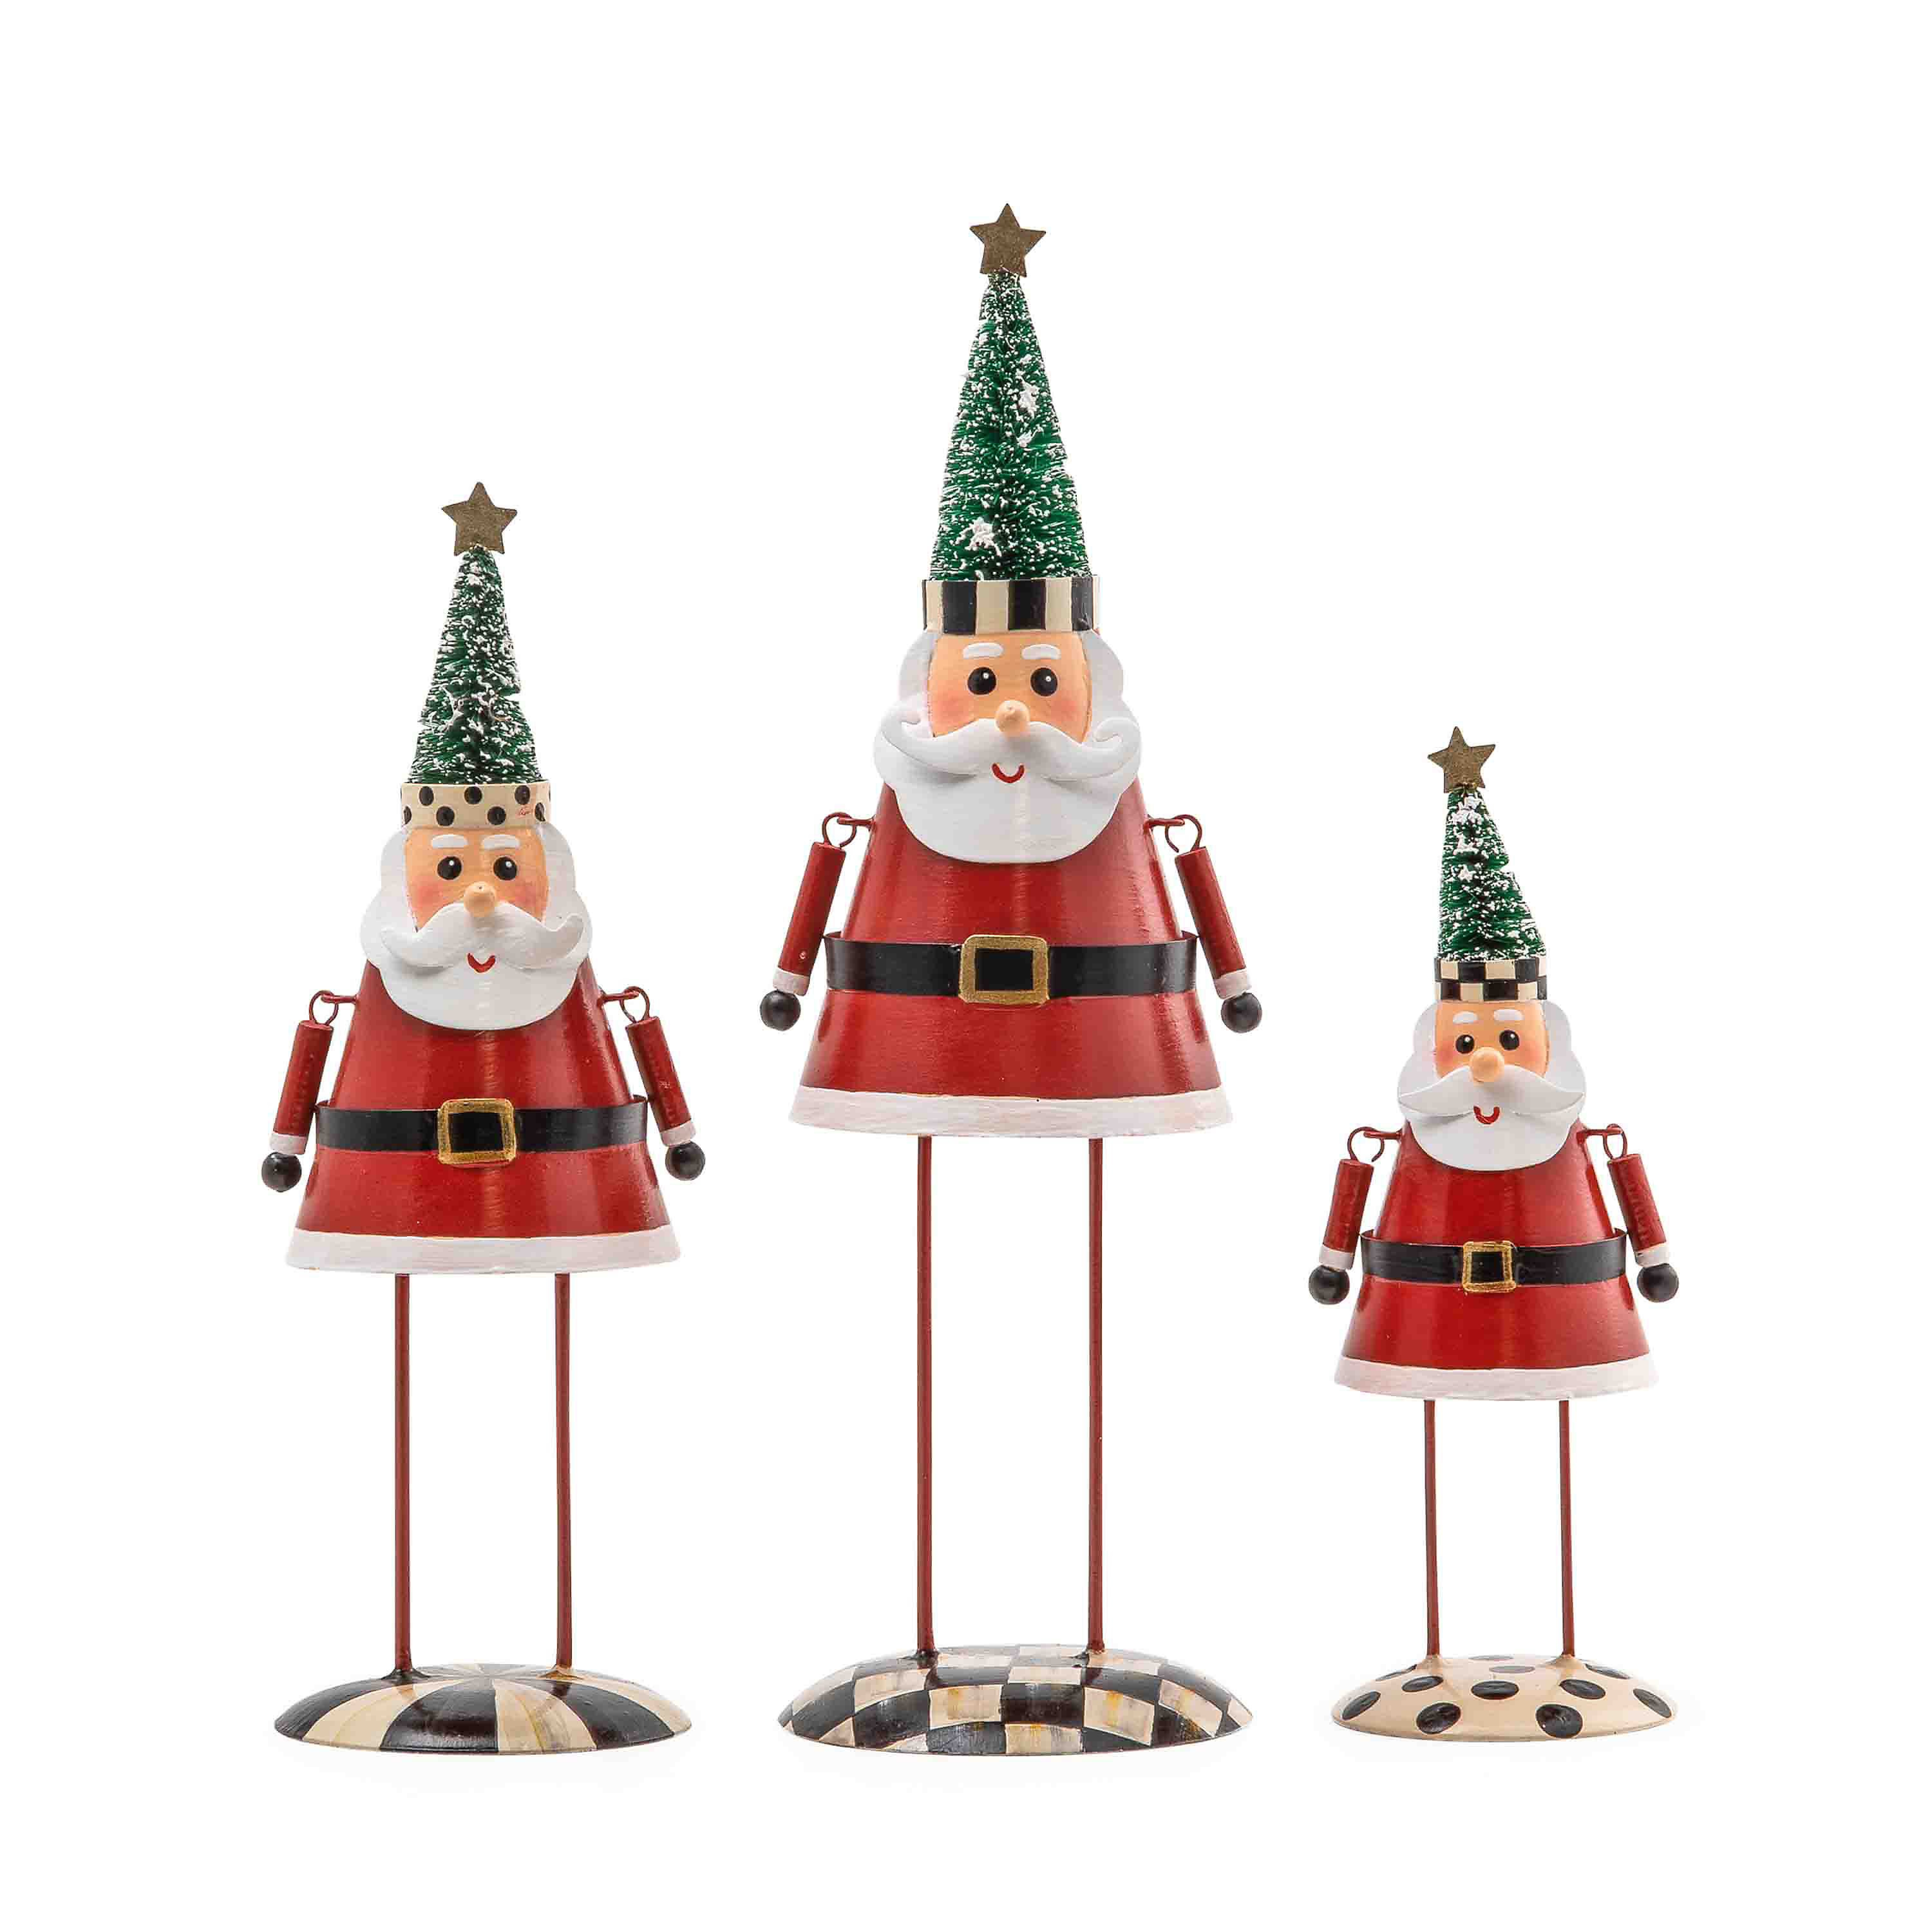 Tree Top Santa Figures, Set of 3 mackenzie-childs Panama 0